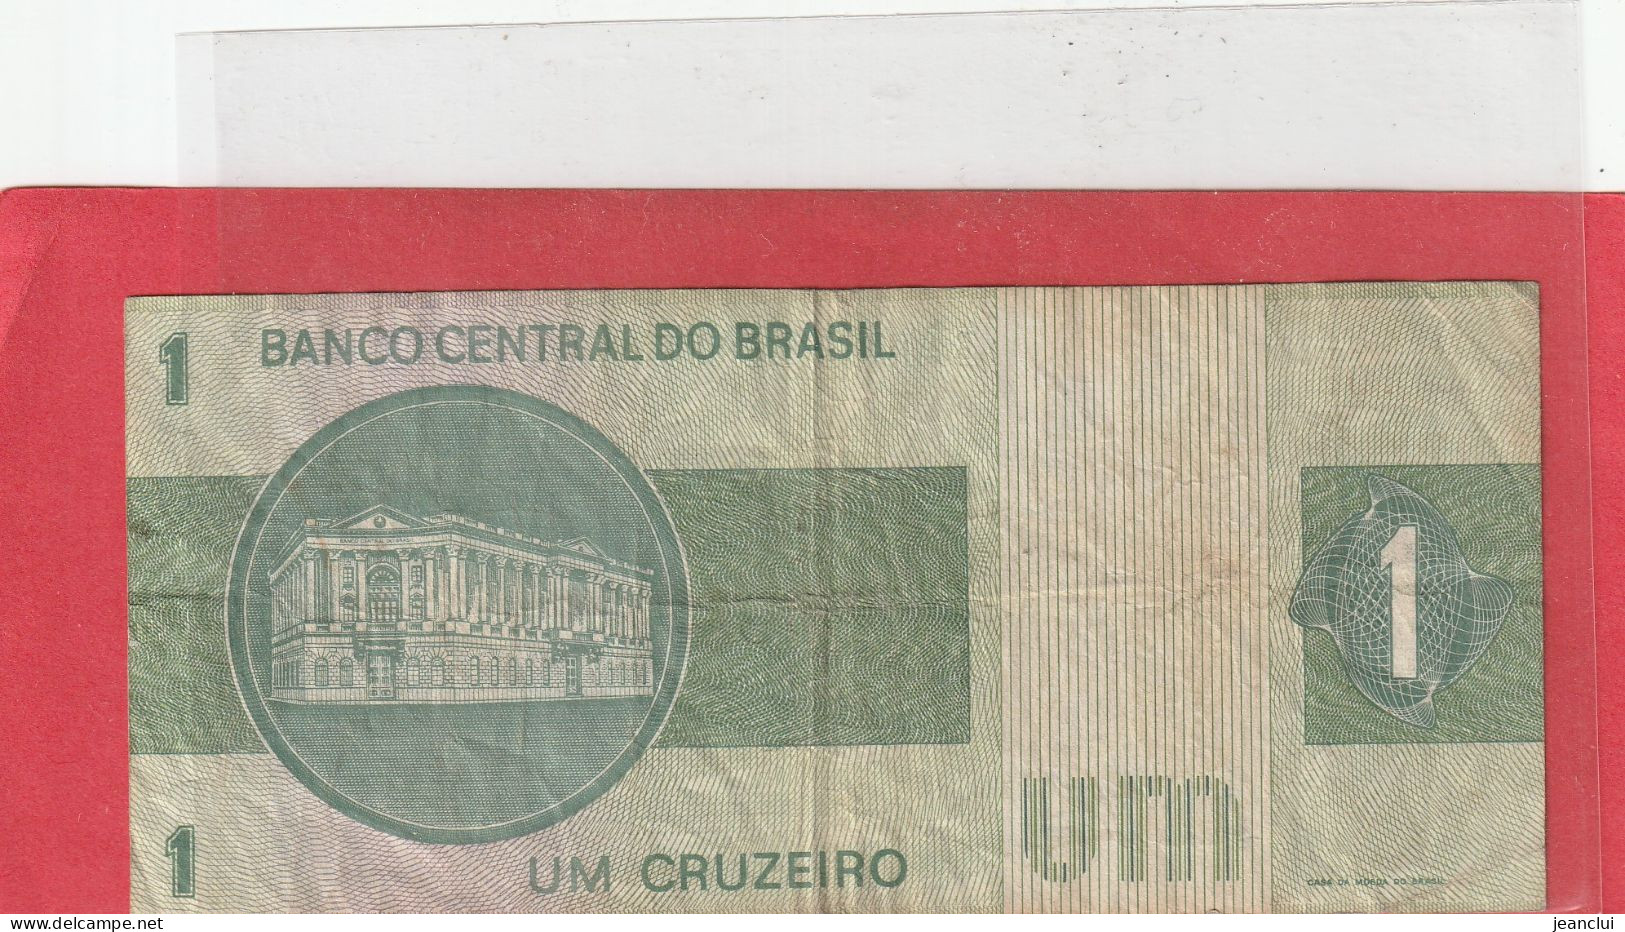 BANCO CENTRAL DO BRASIL  . 1 CRUZEIRO .( 1972-81 )  N° B 09183 / 061105 . 2 SCANNES  .  BILLET USITE - Brésil